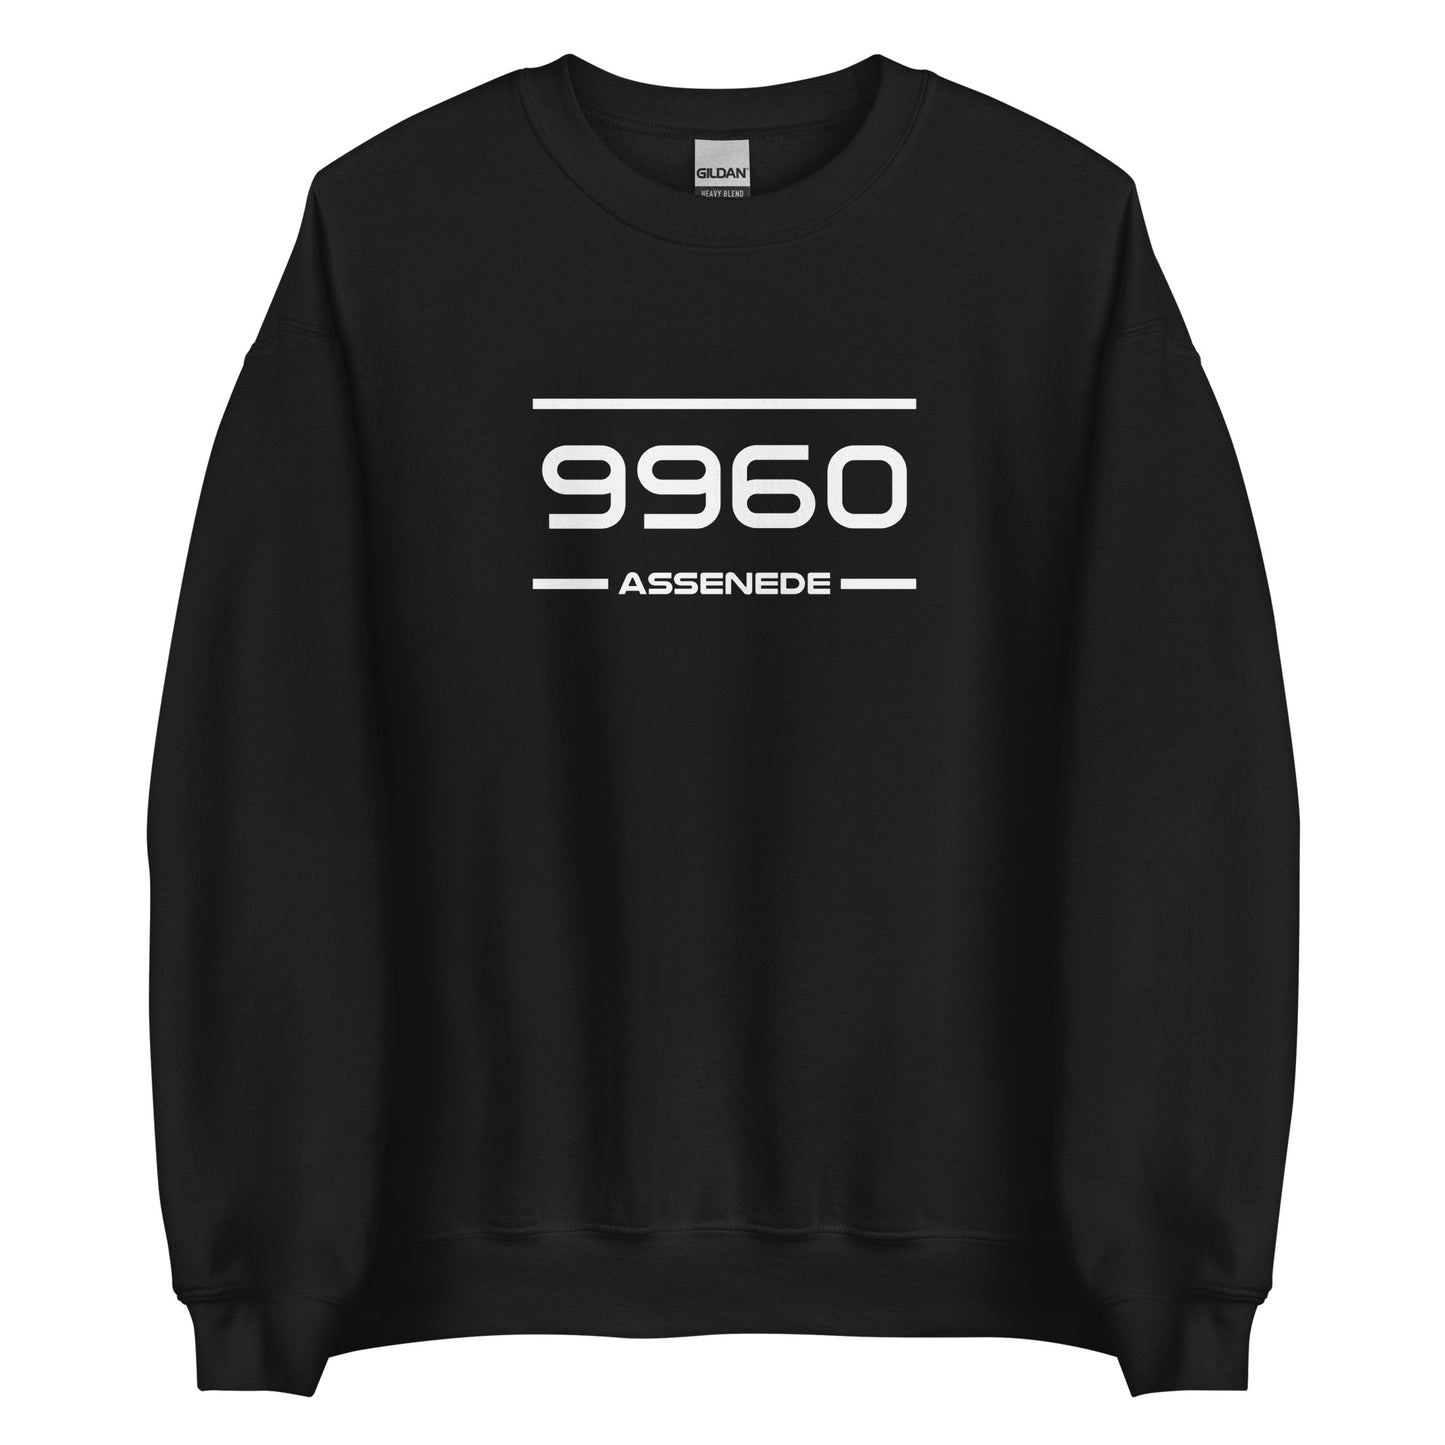 Sweater - 9960 - Assenede (M/V)